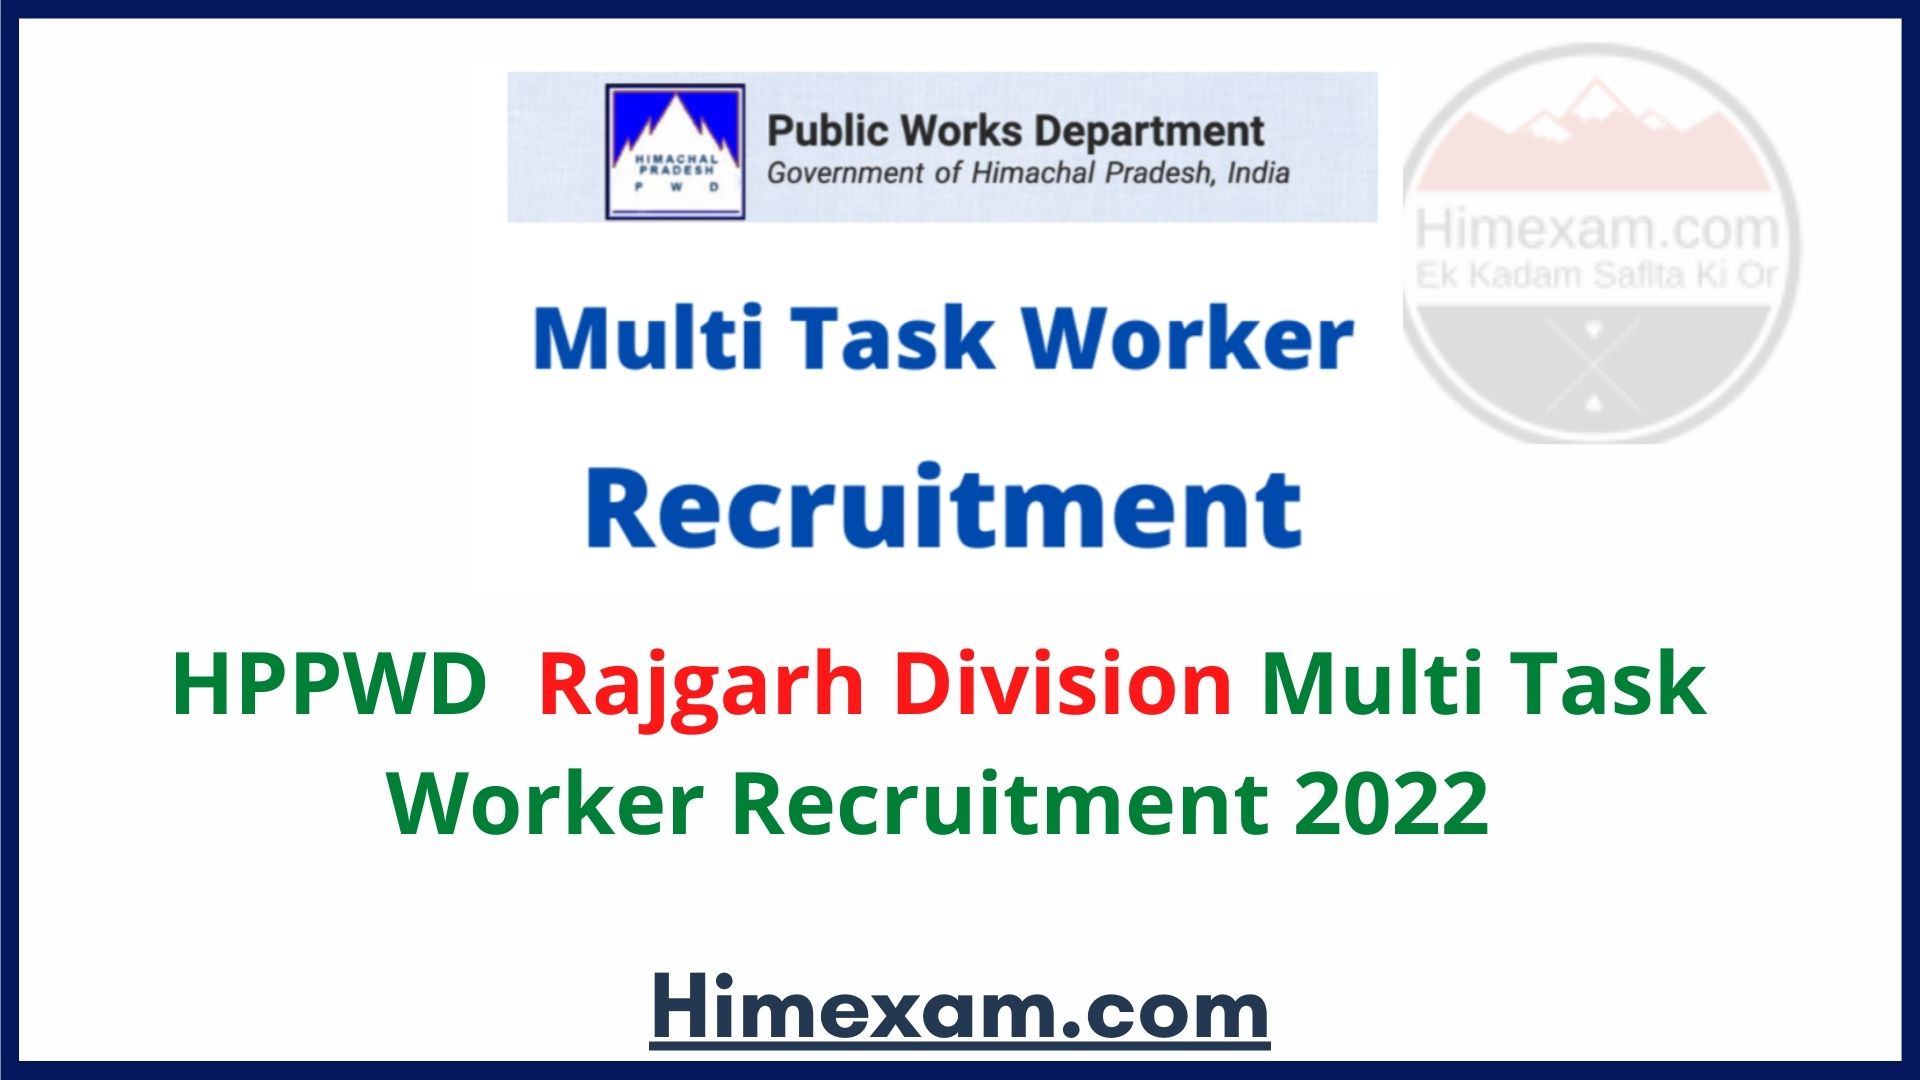 HPPWD Rajgarh Division Multi Task Worker Recruitment 2022